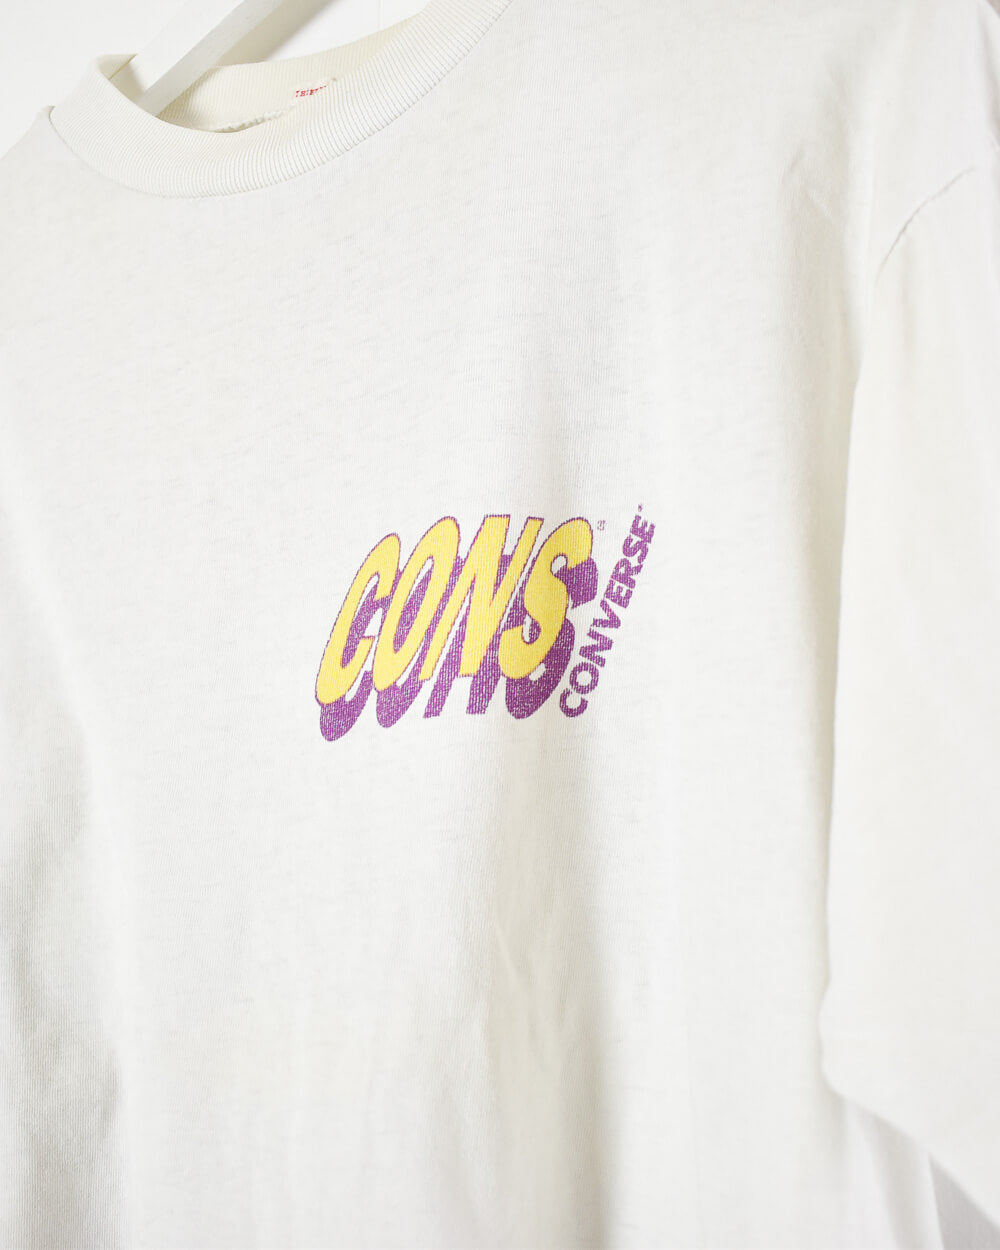 White Cons Converse Wam Bam Jam T-Shirt - Medium